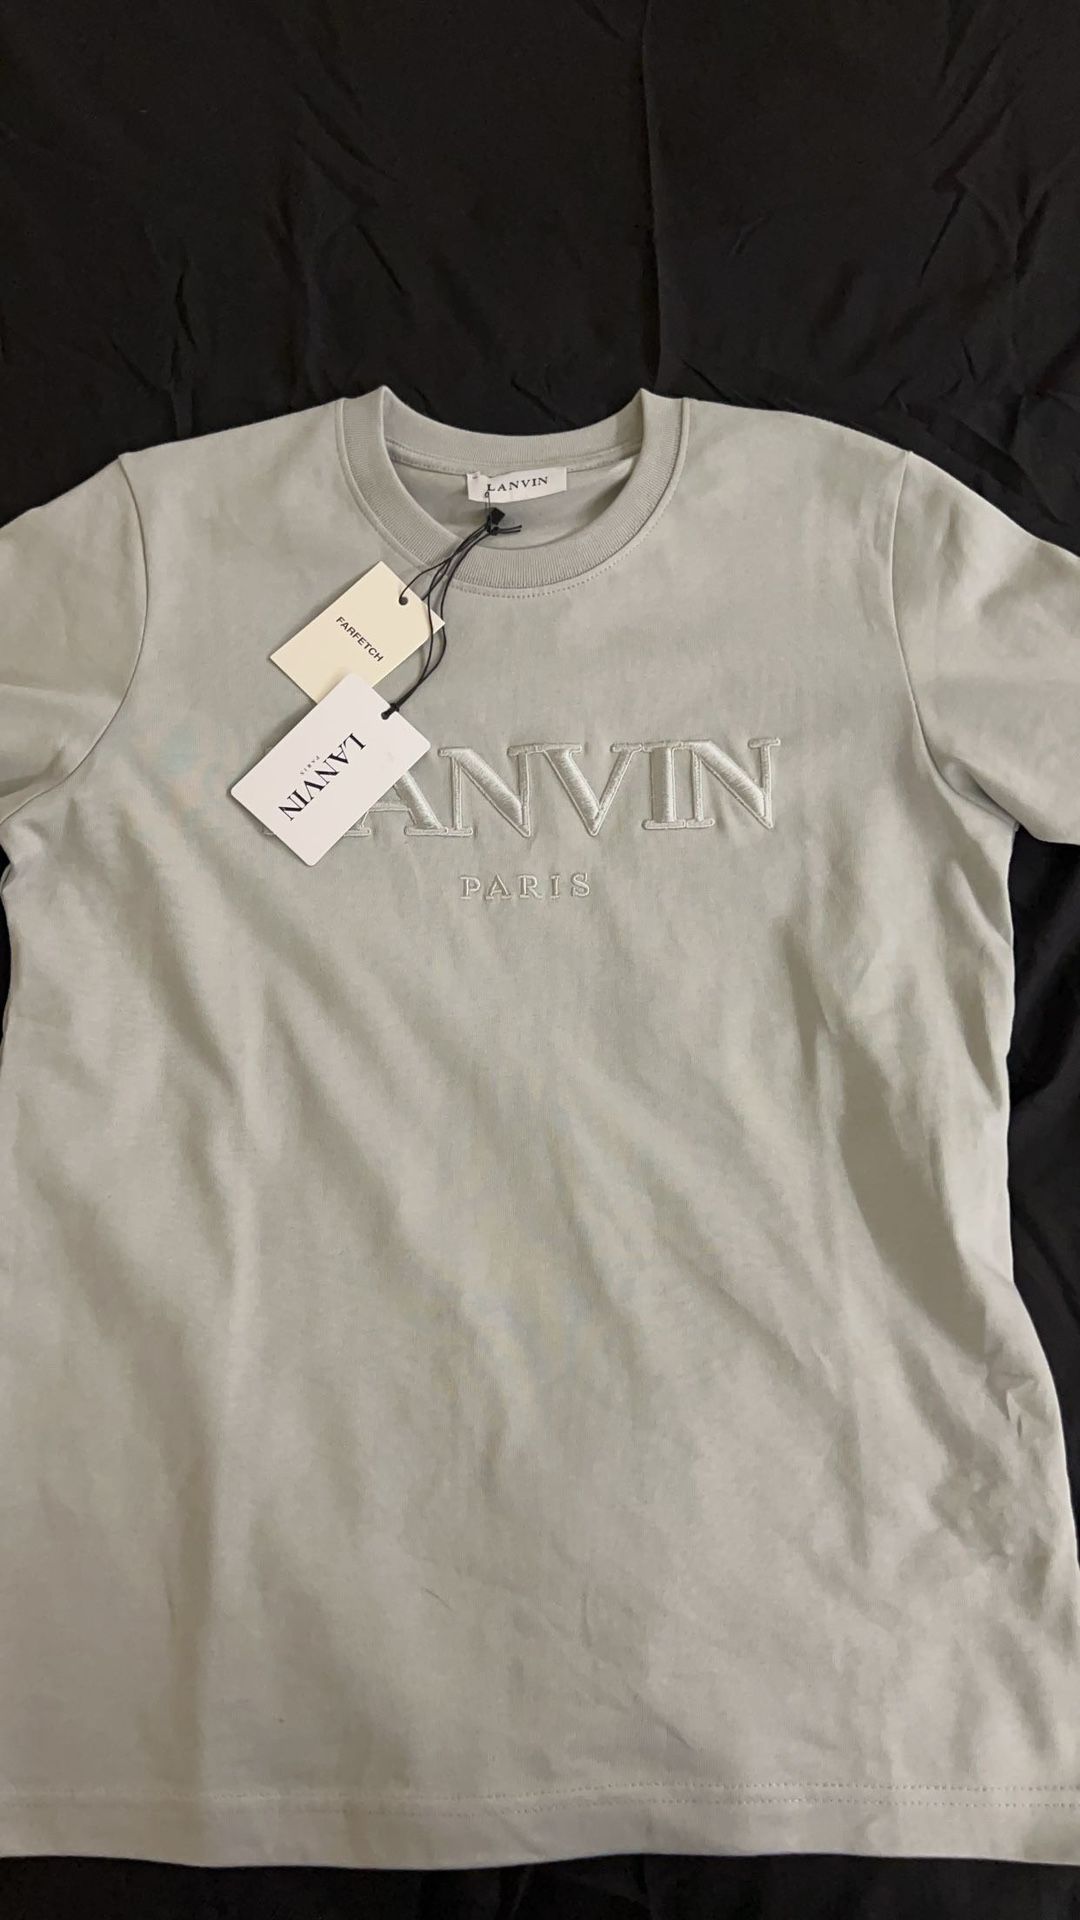 Lanvin T shirt